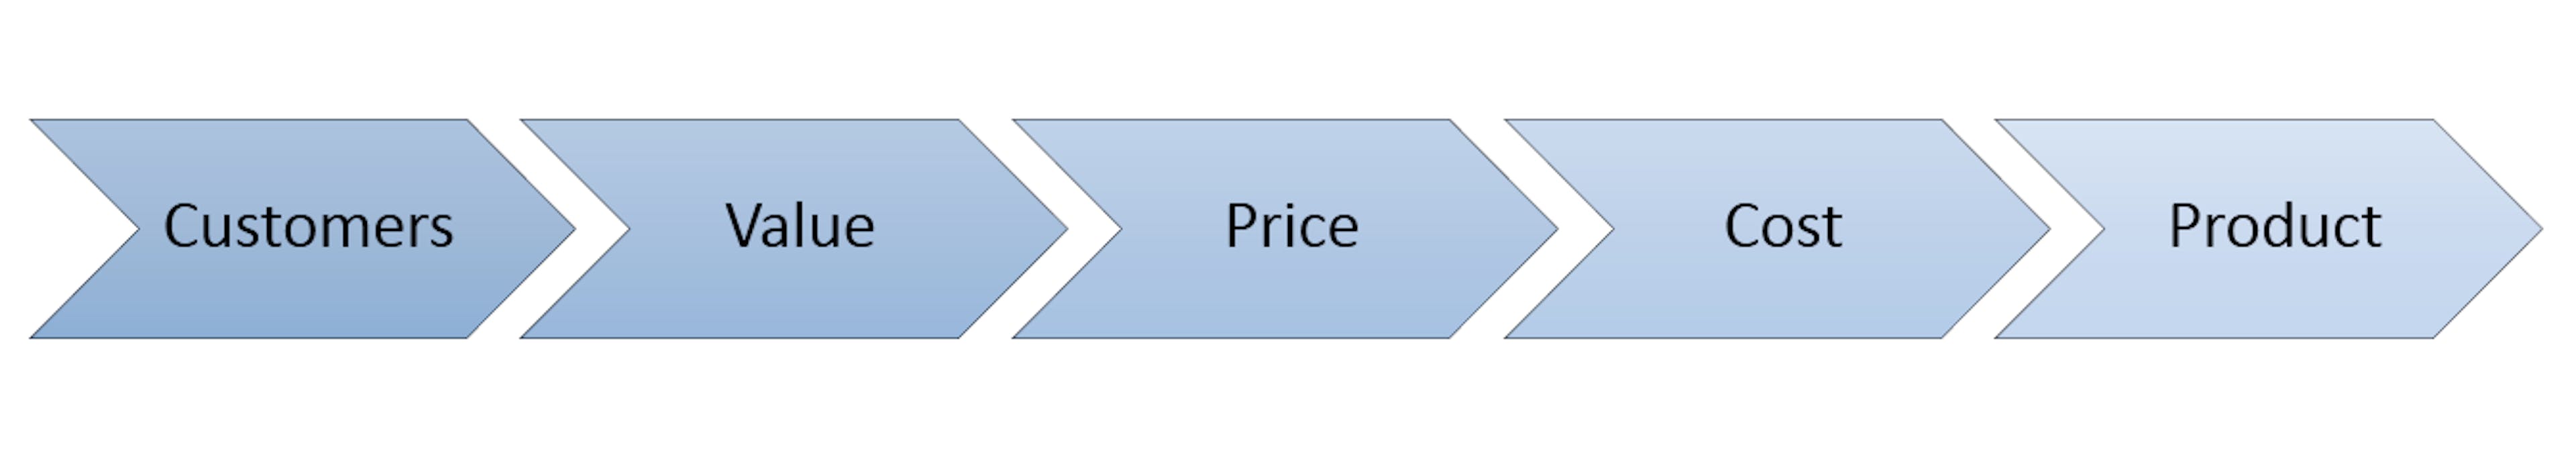 Value-Based Pricing Model